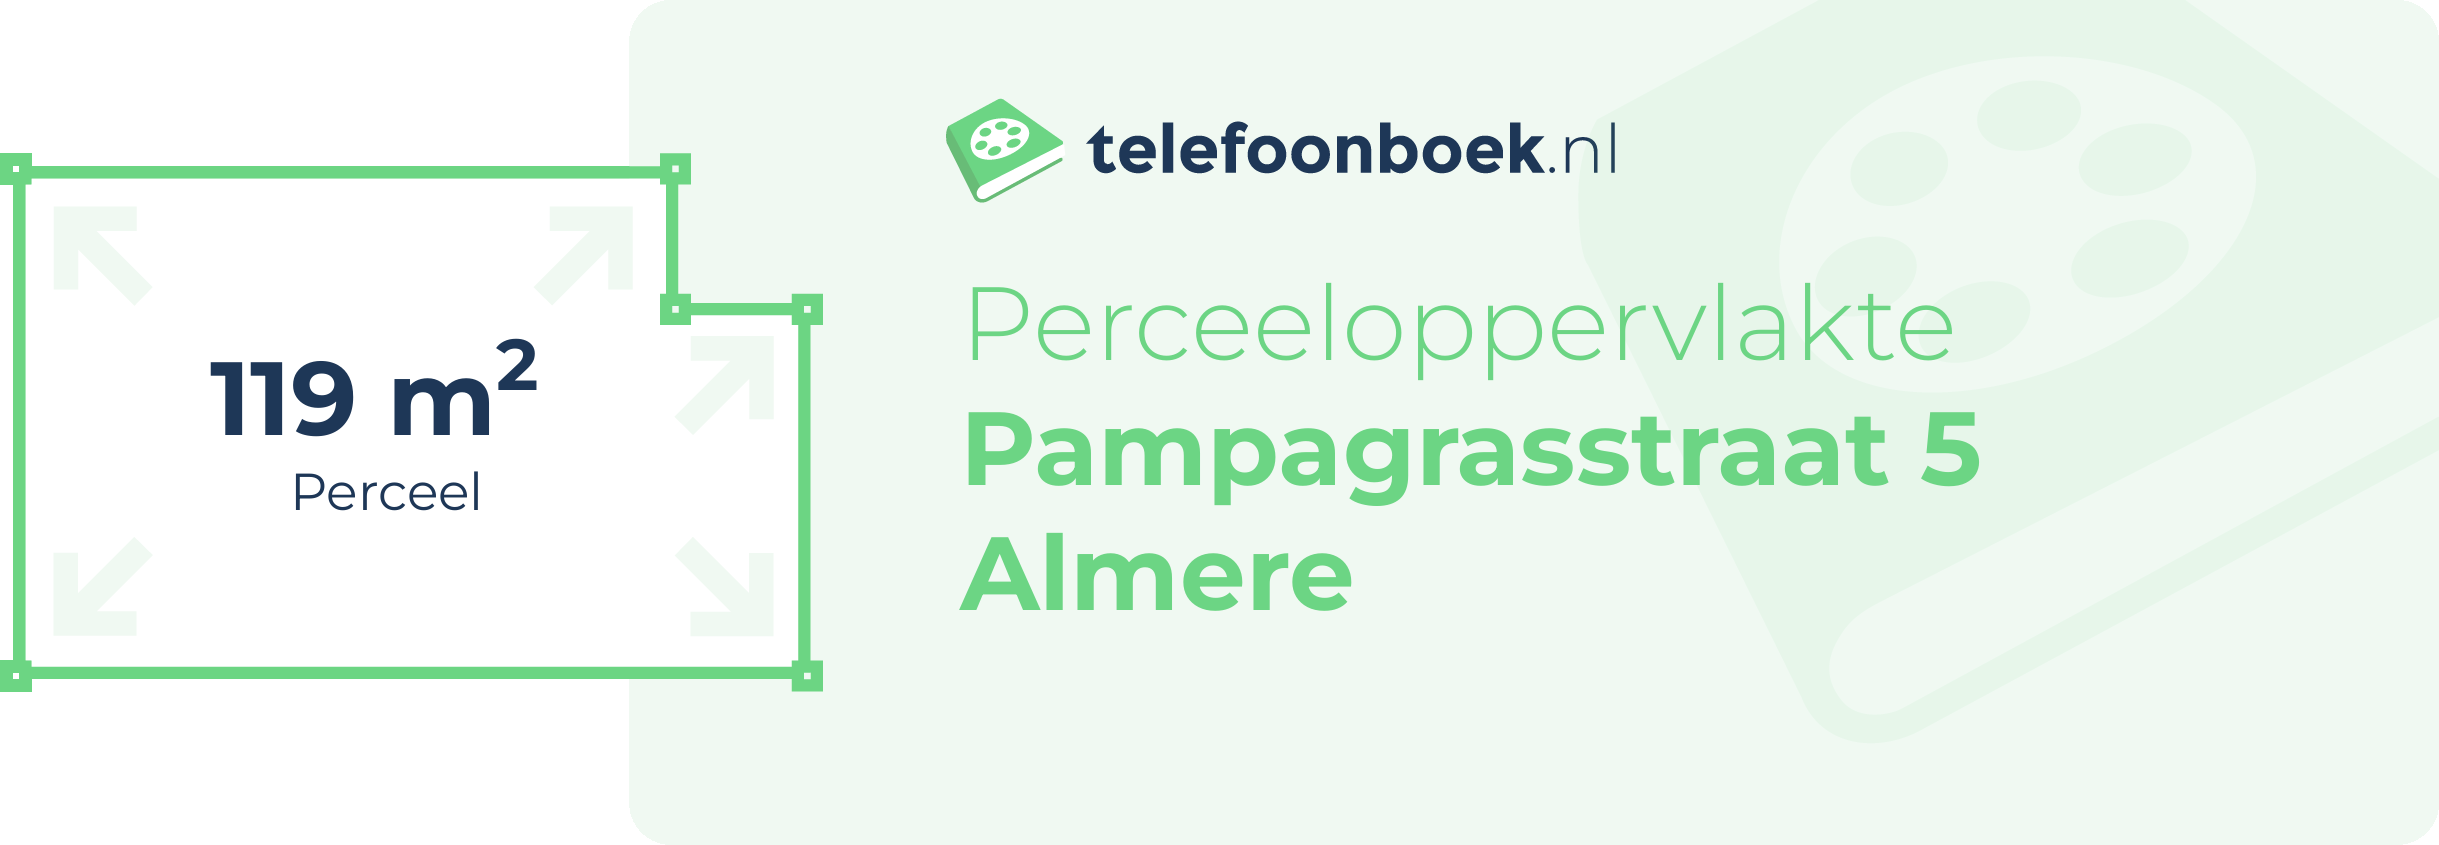 Perceeloppervlakte Pampagrasstraat 5 Almere